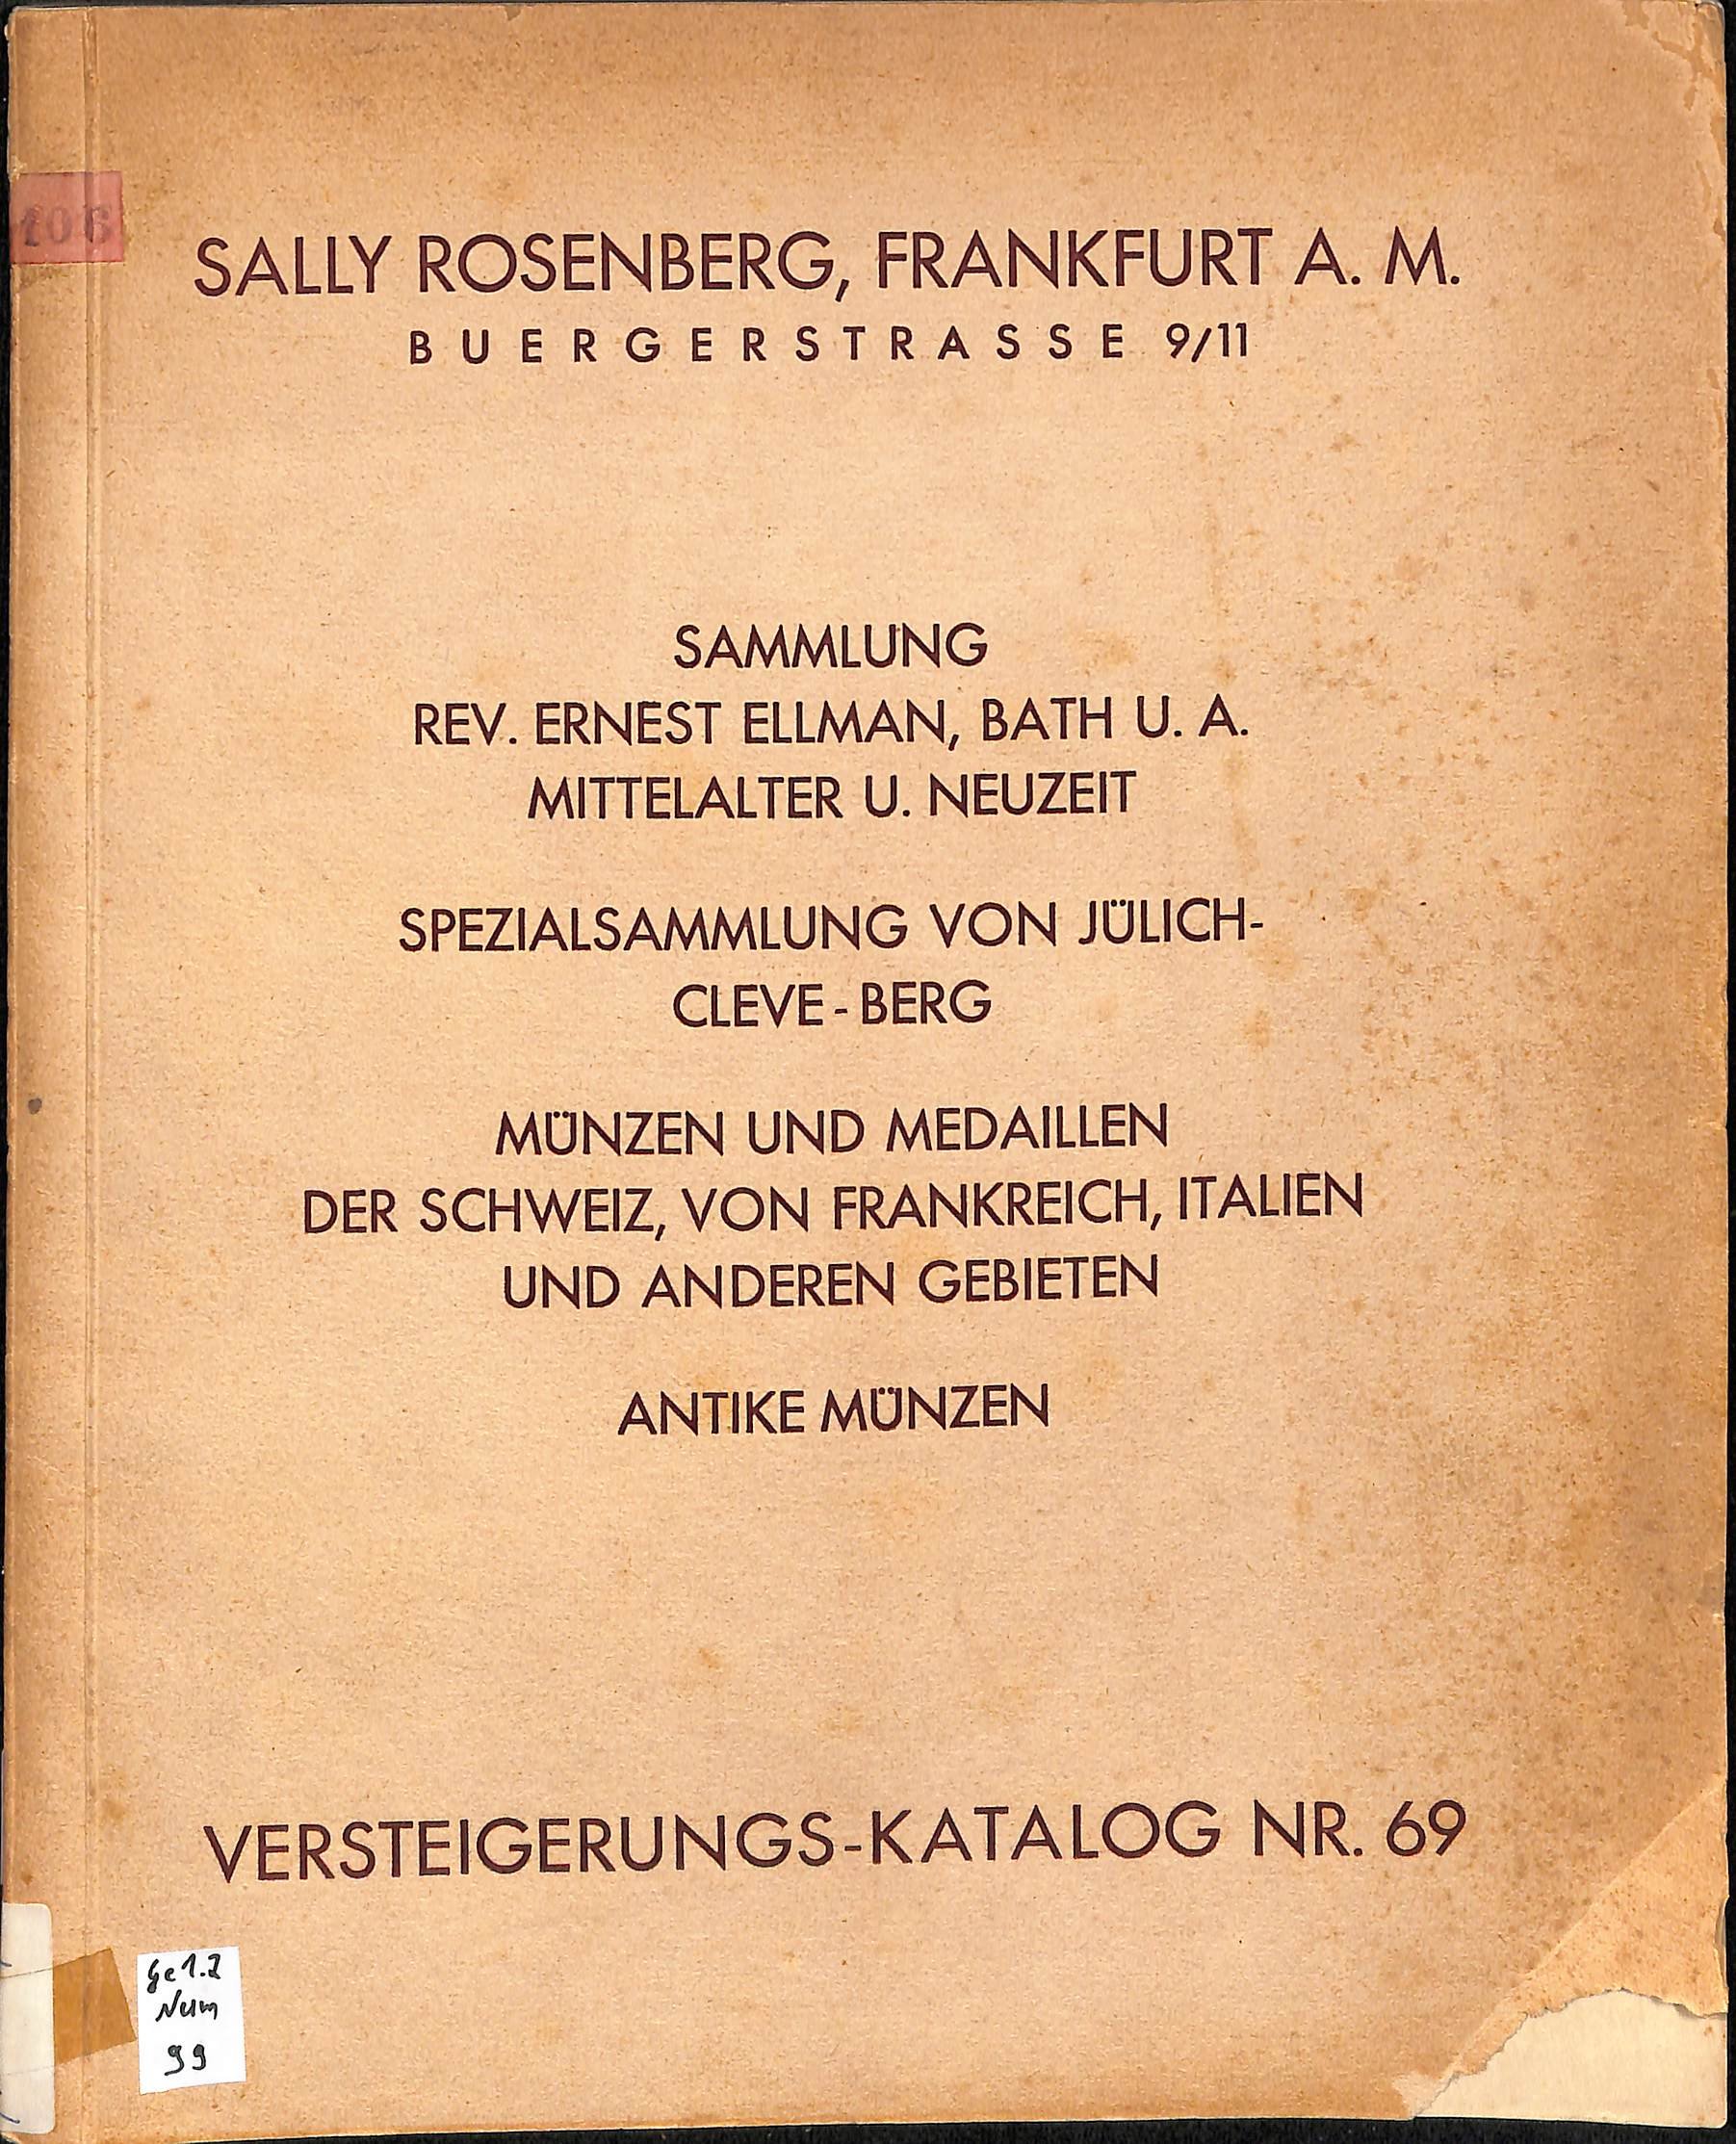 Sally Rosenberg, Versteigerungskatalog Nr. 69, 1930 (Heimatwelten Zwönitz CC BY-NC-SA)